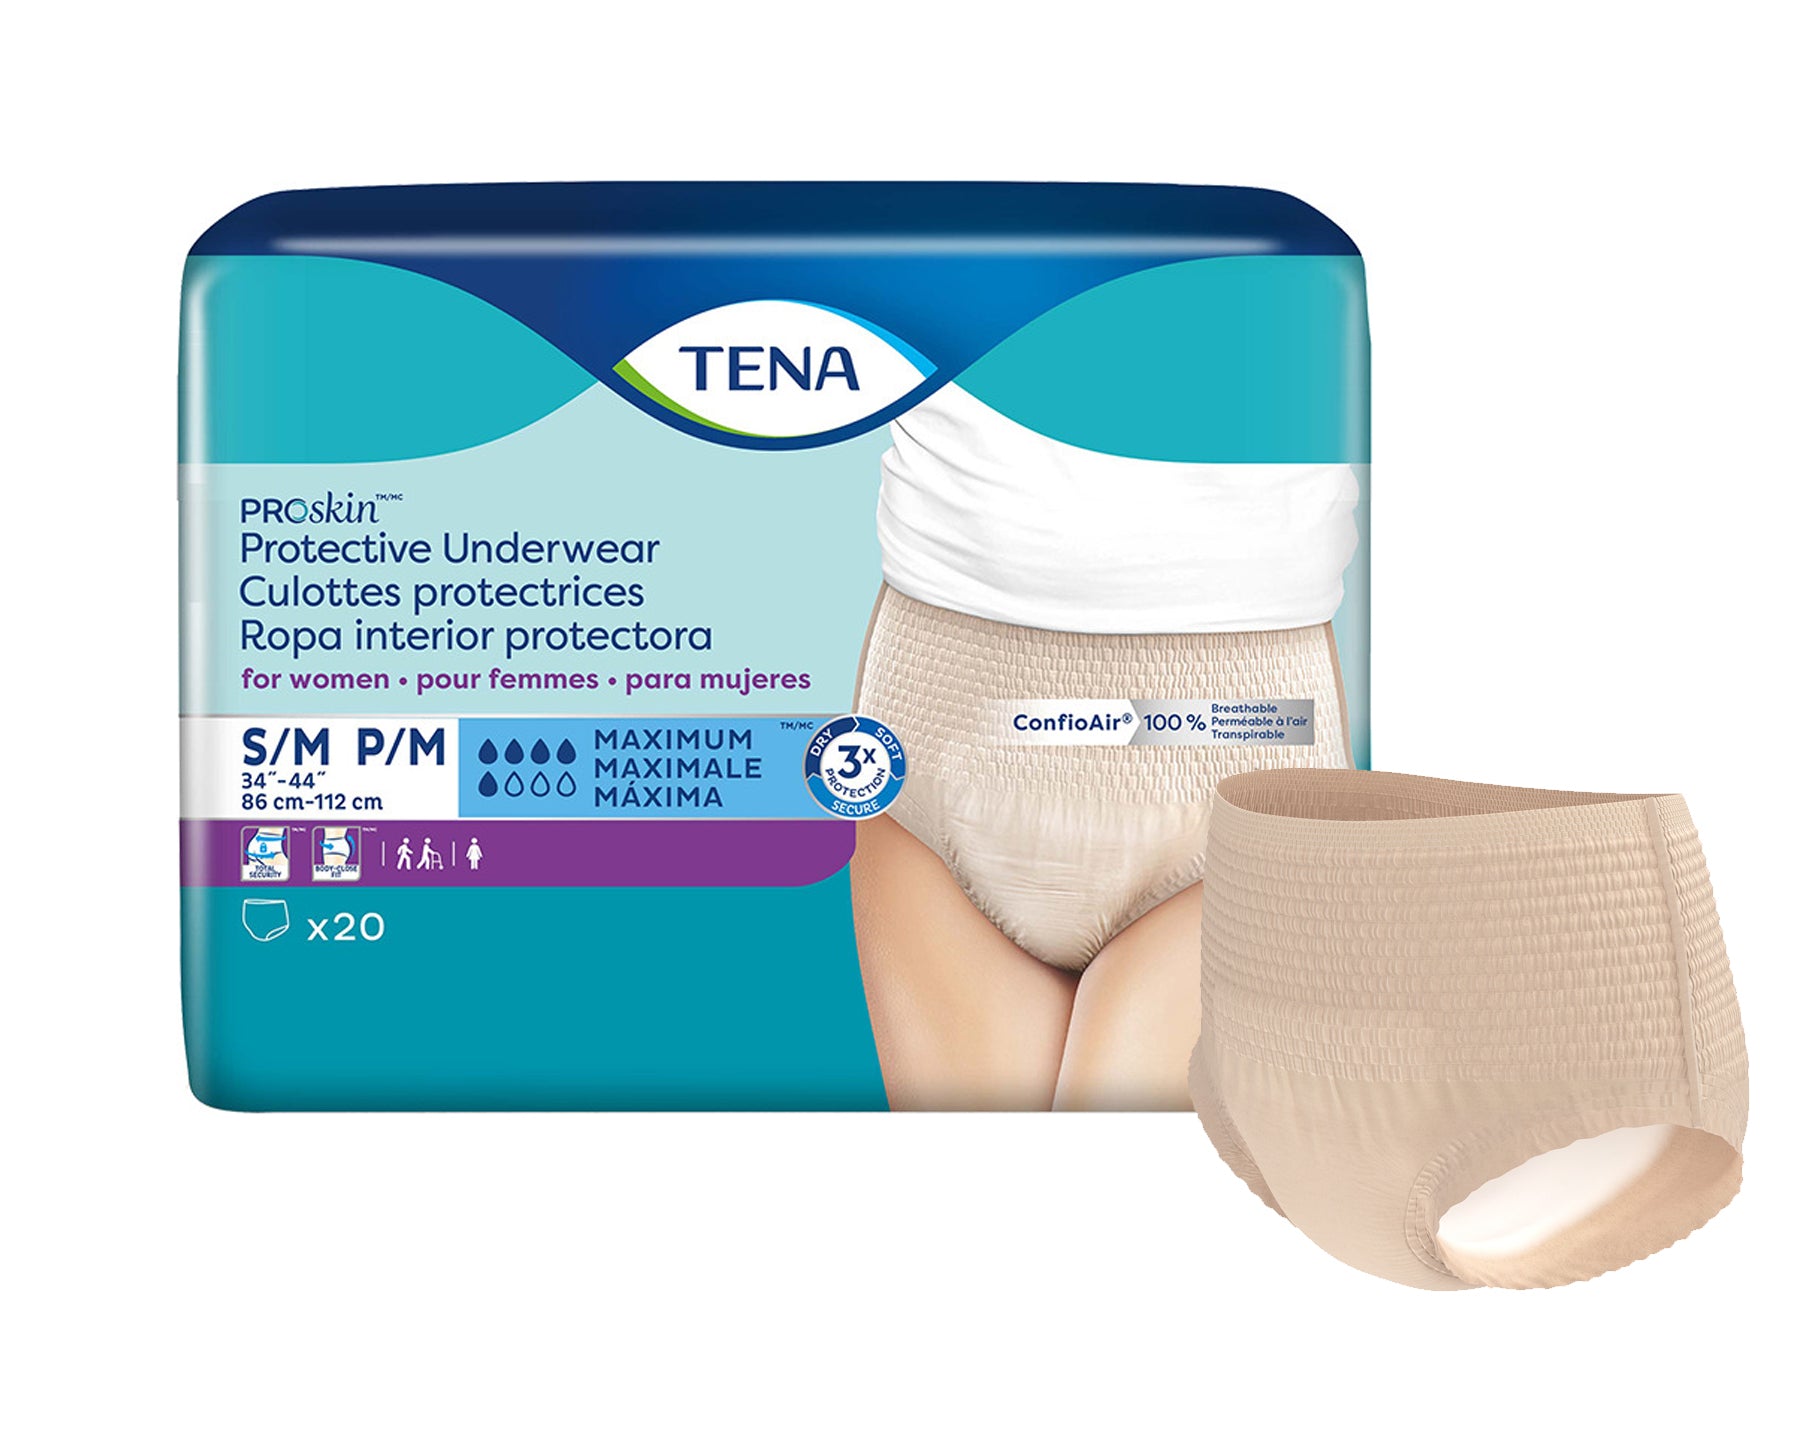 TENA ProSkin Protective Underwear for Women – Healthcare Solutions